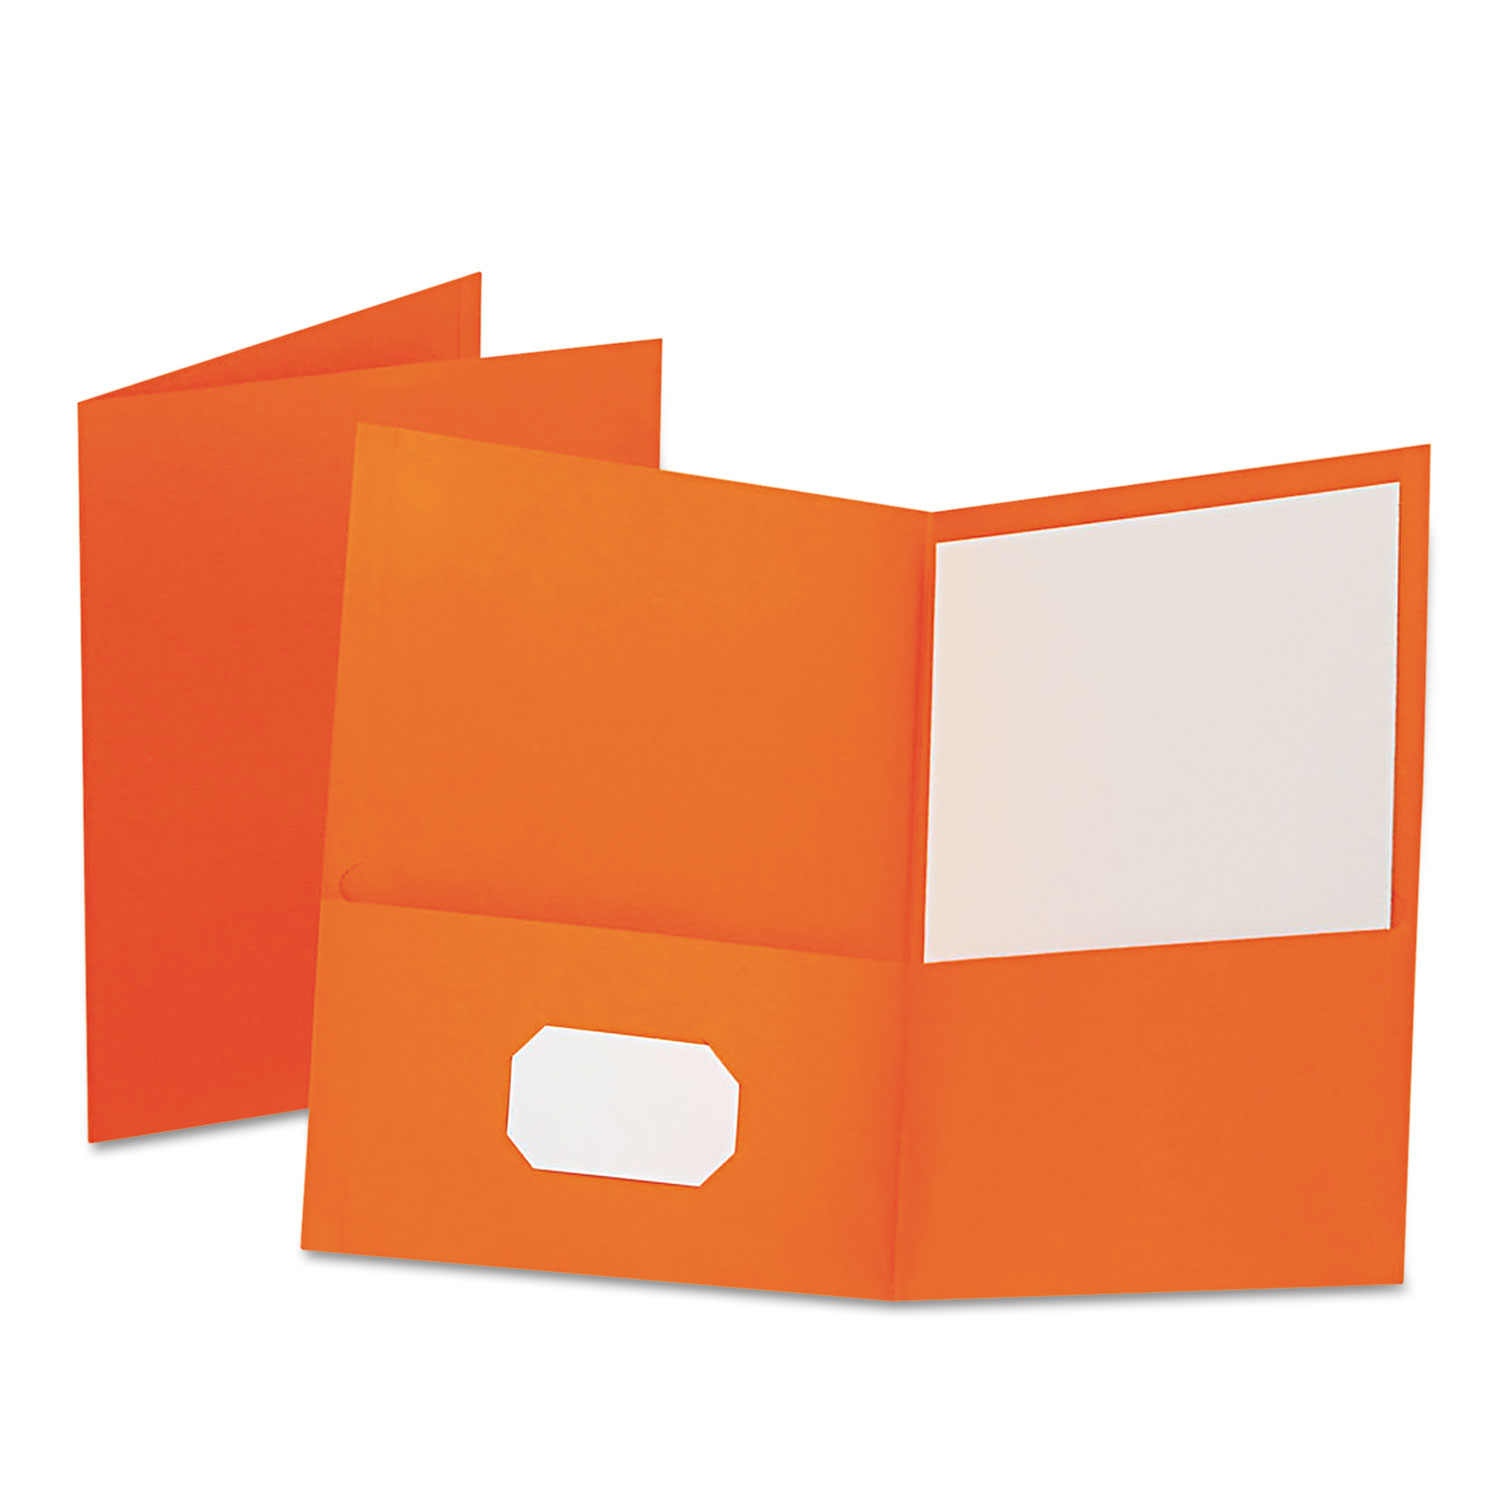 Twin-Pocket Folder, Embossed Leather Grain Paper, Orange, 25/Box